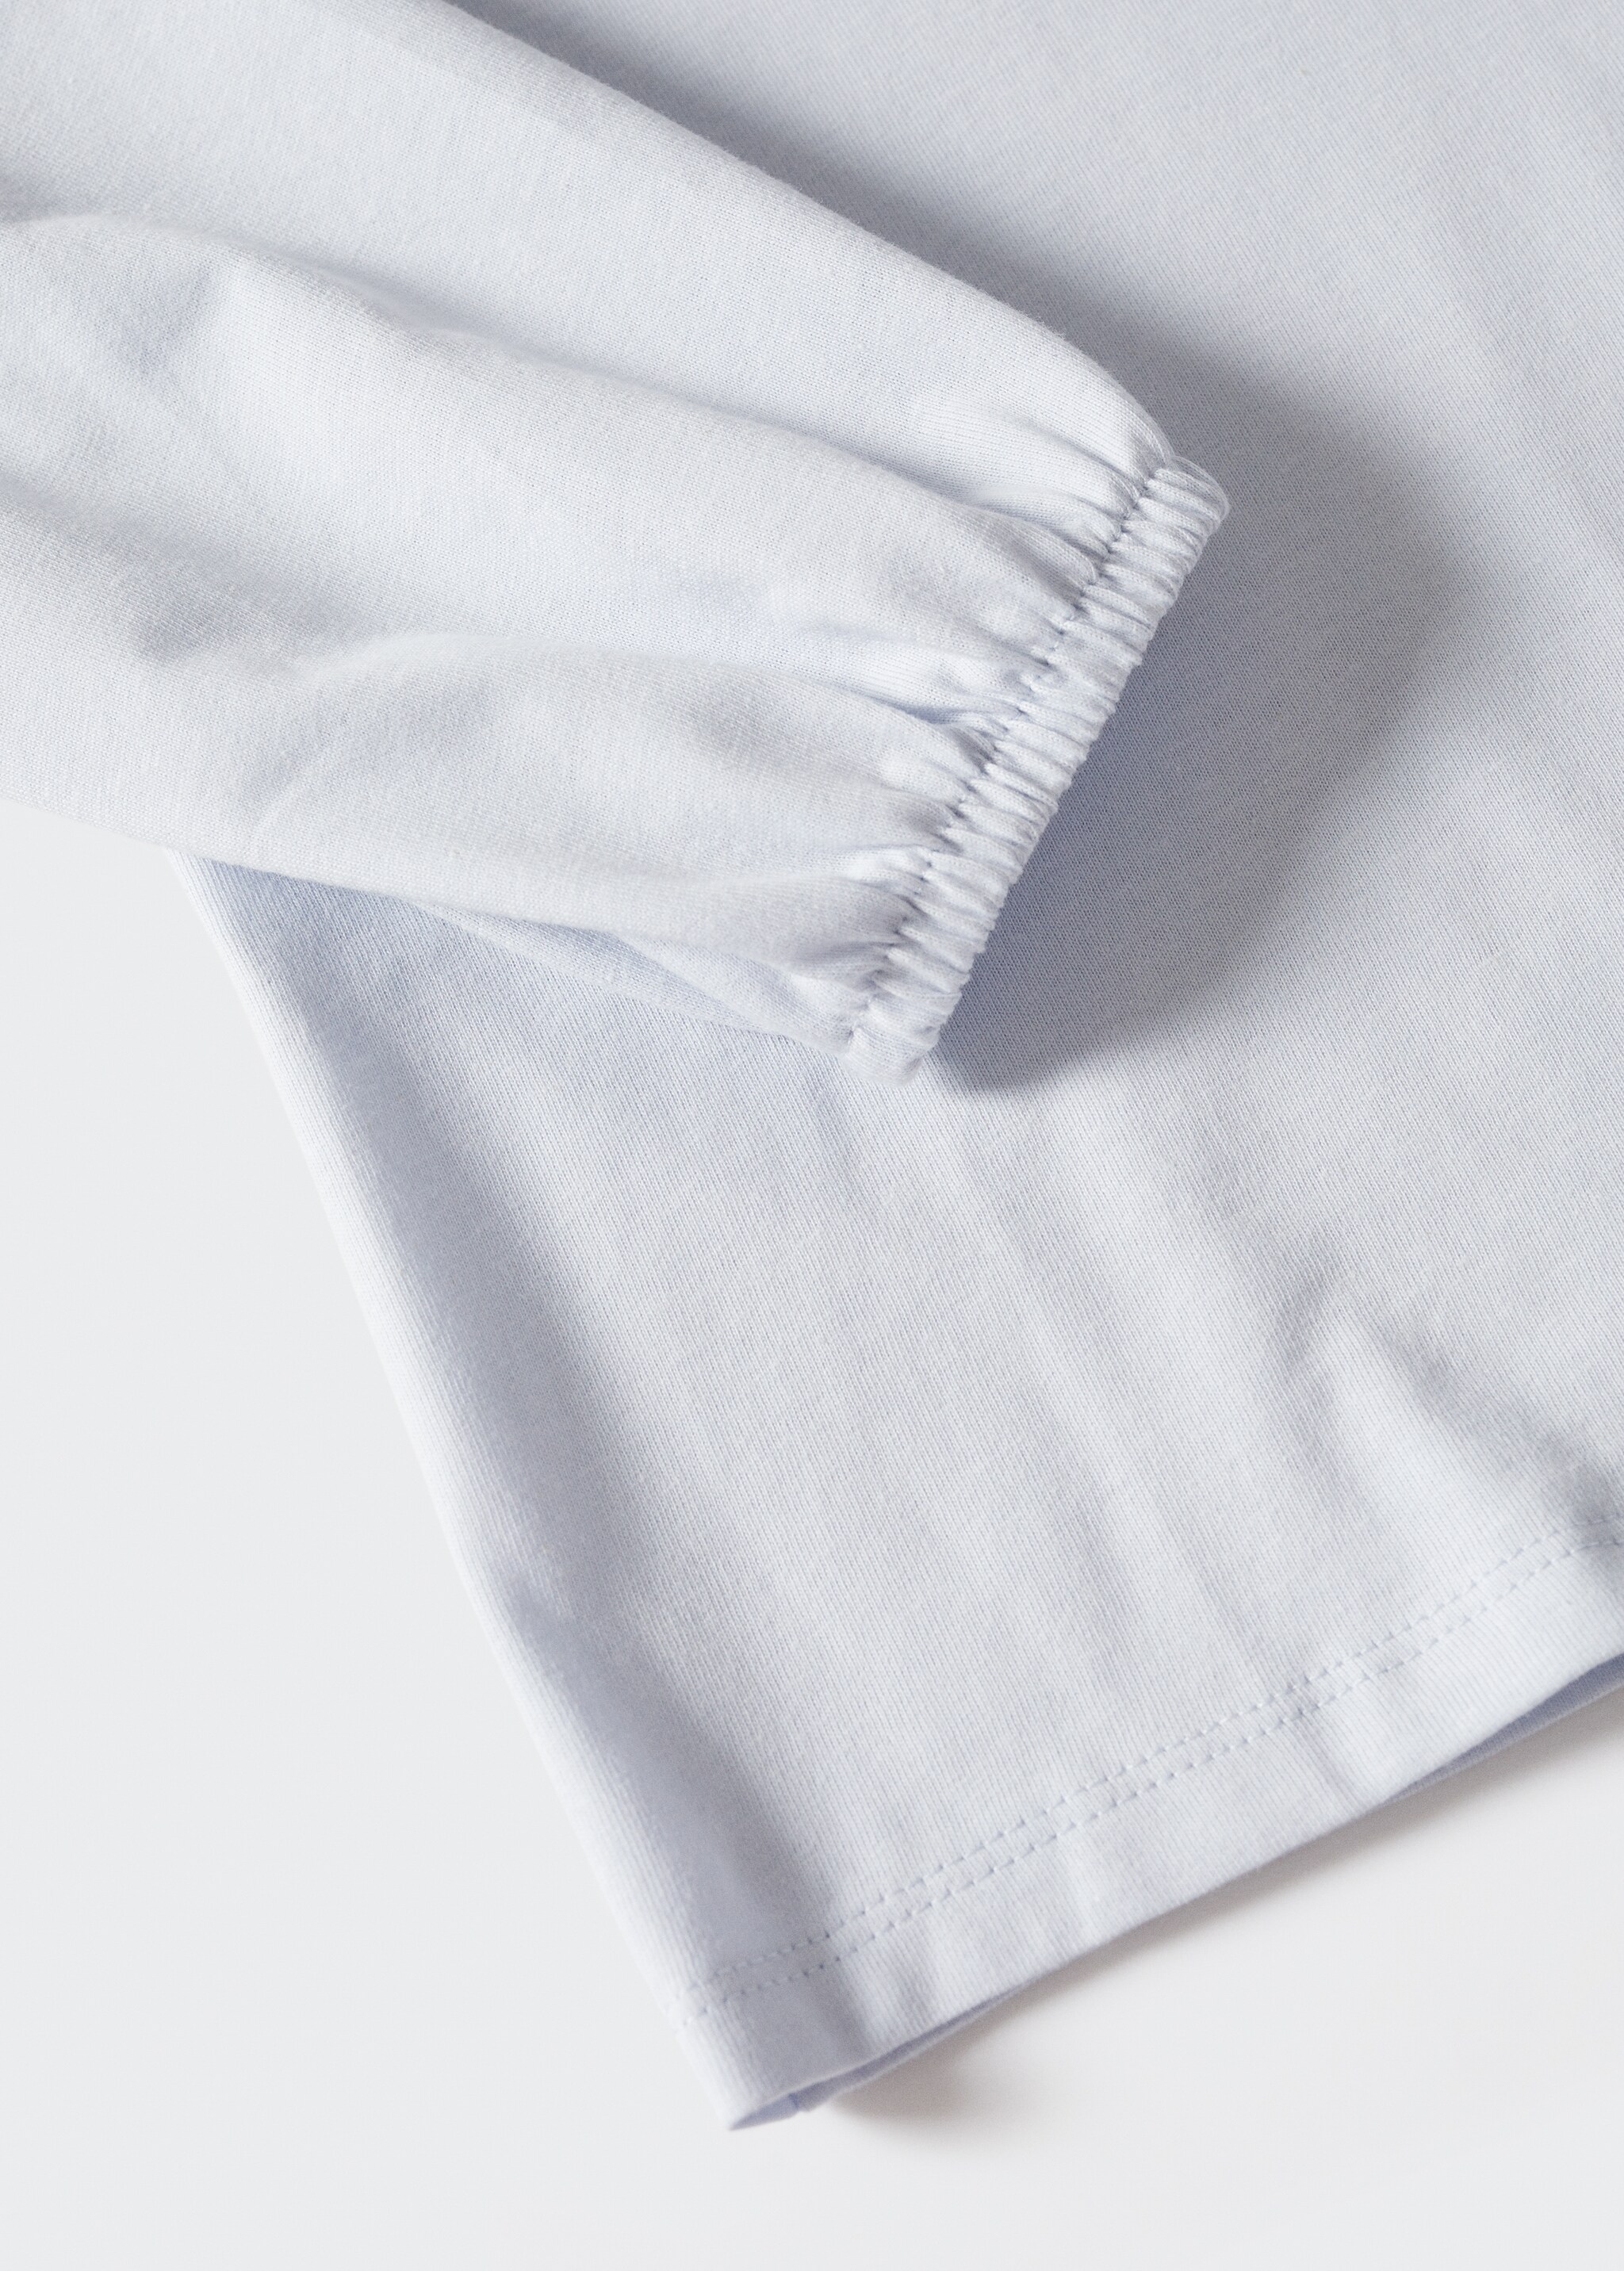 Camiseta algodón manga larga - Detalle del artículo 8